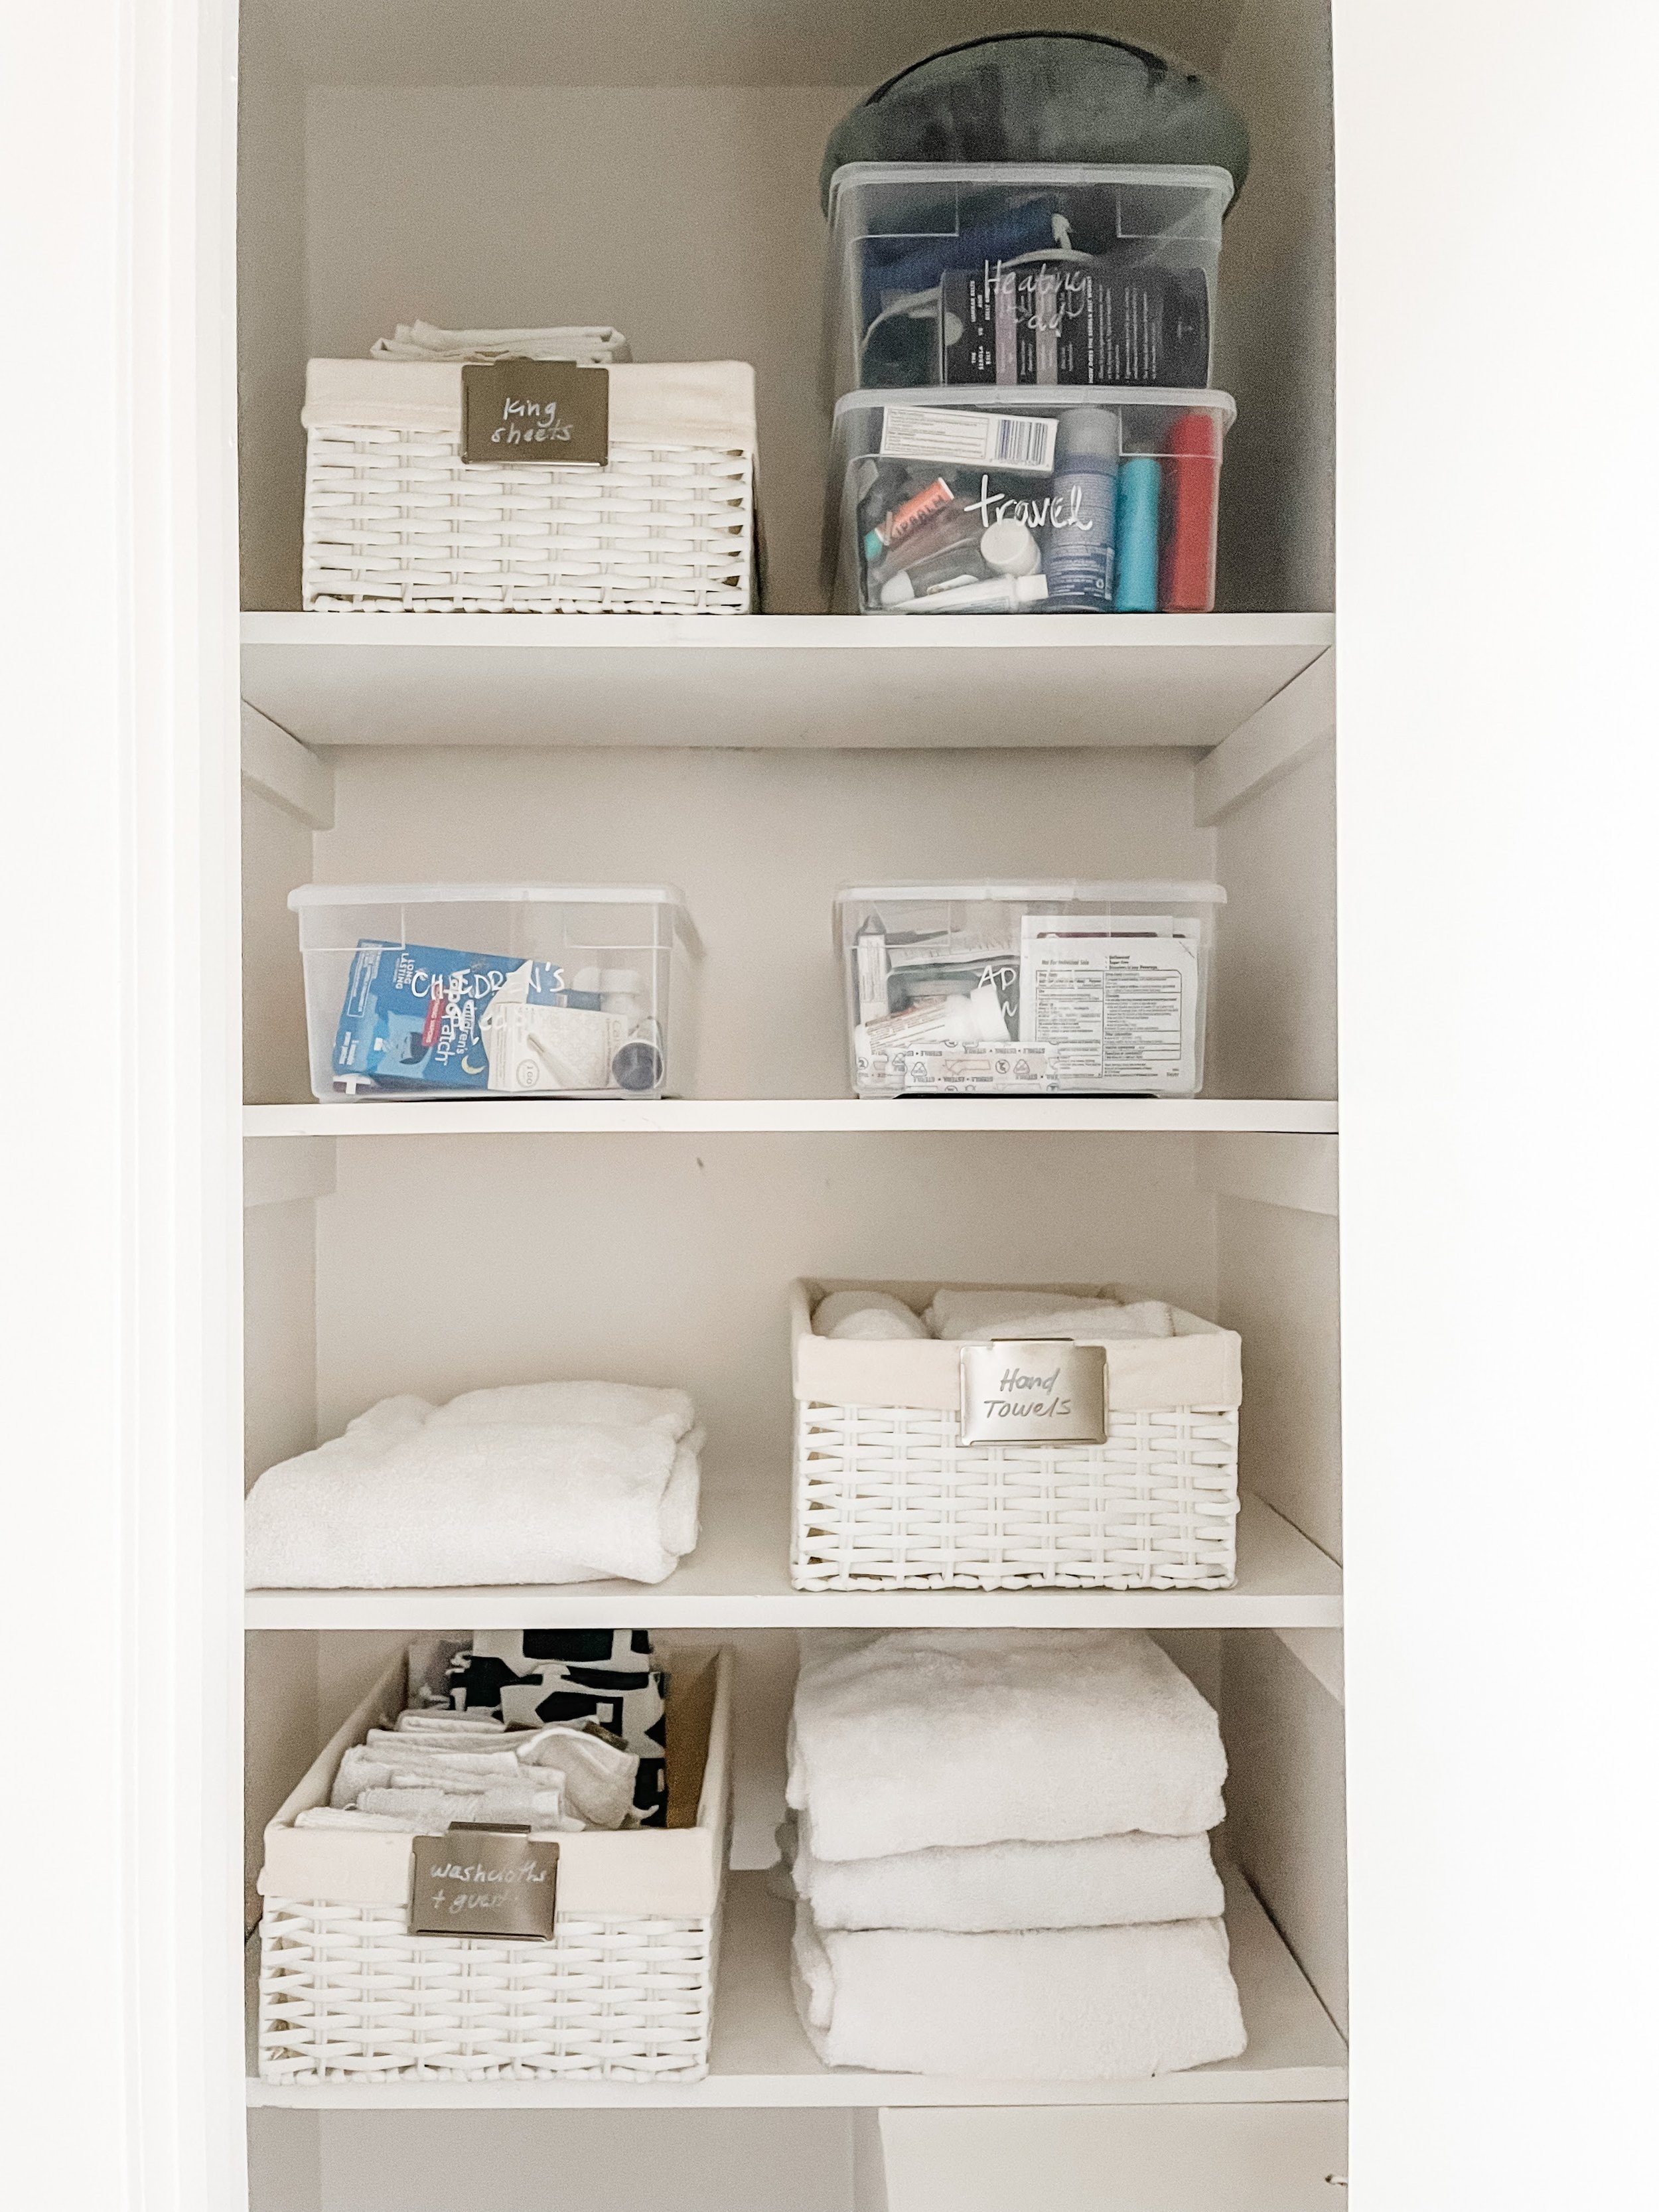 Bathroom Linen Closet Organization - The Simply Organized Home